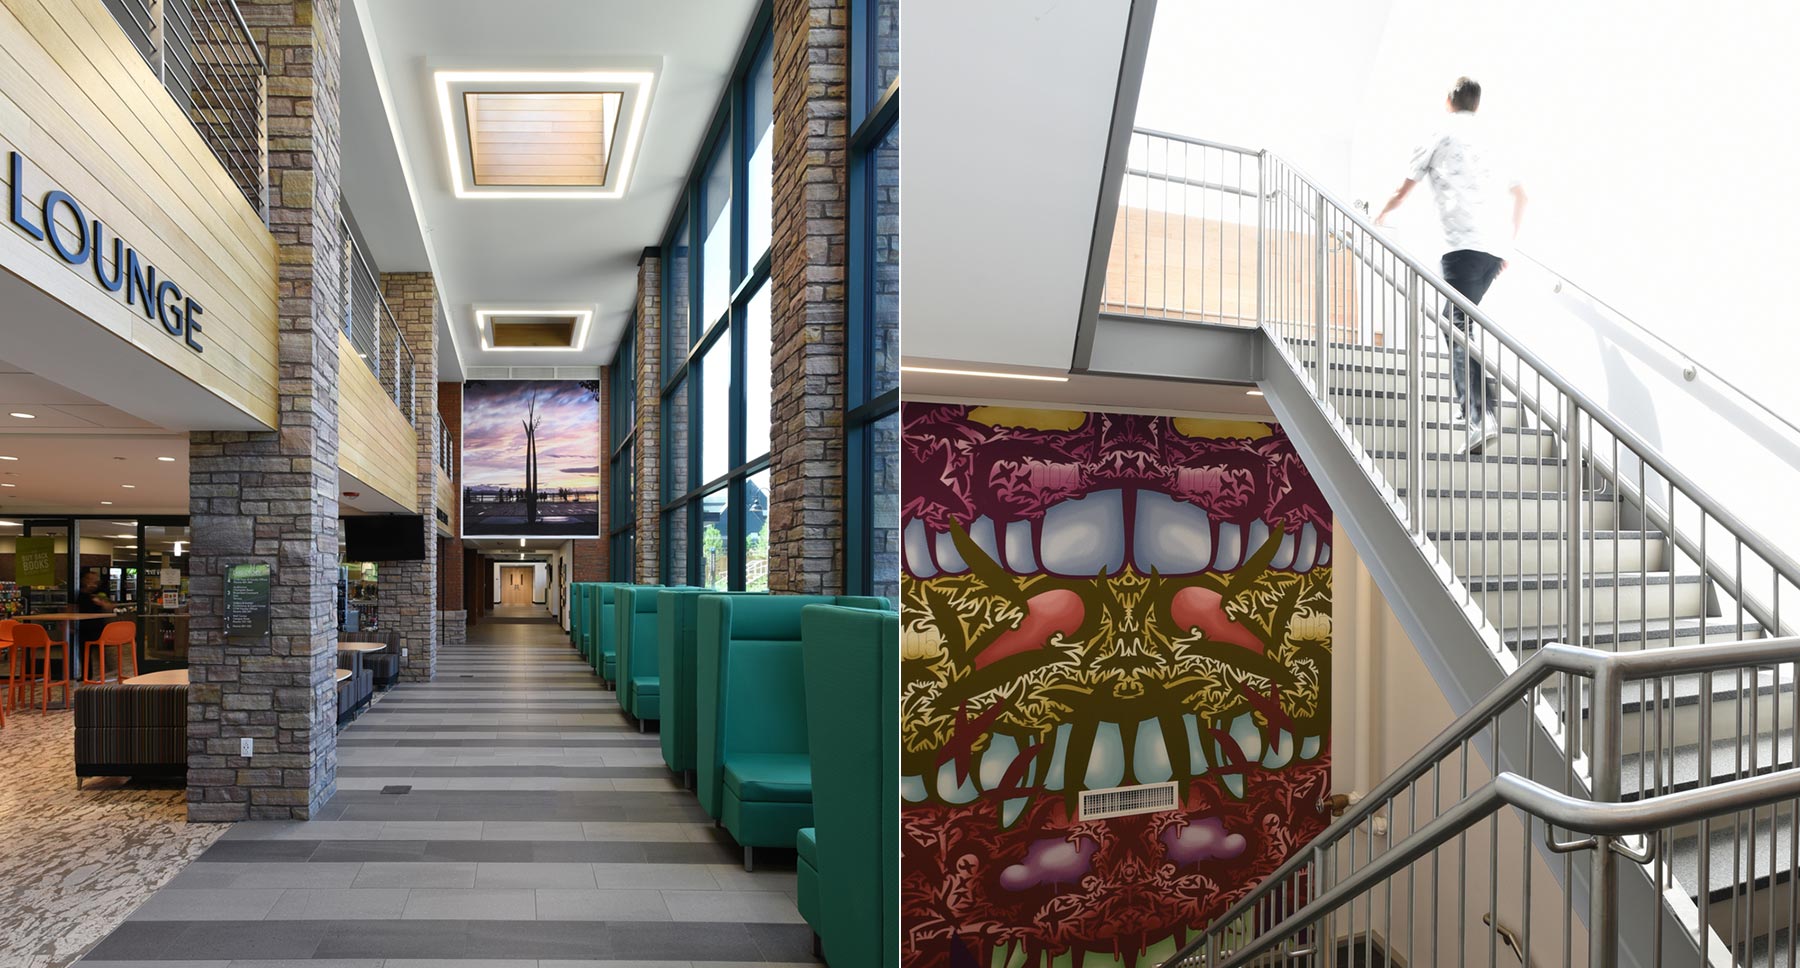 Champlain College CCM Interior Design Education